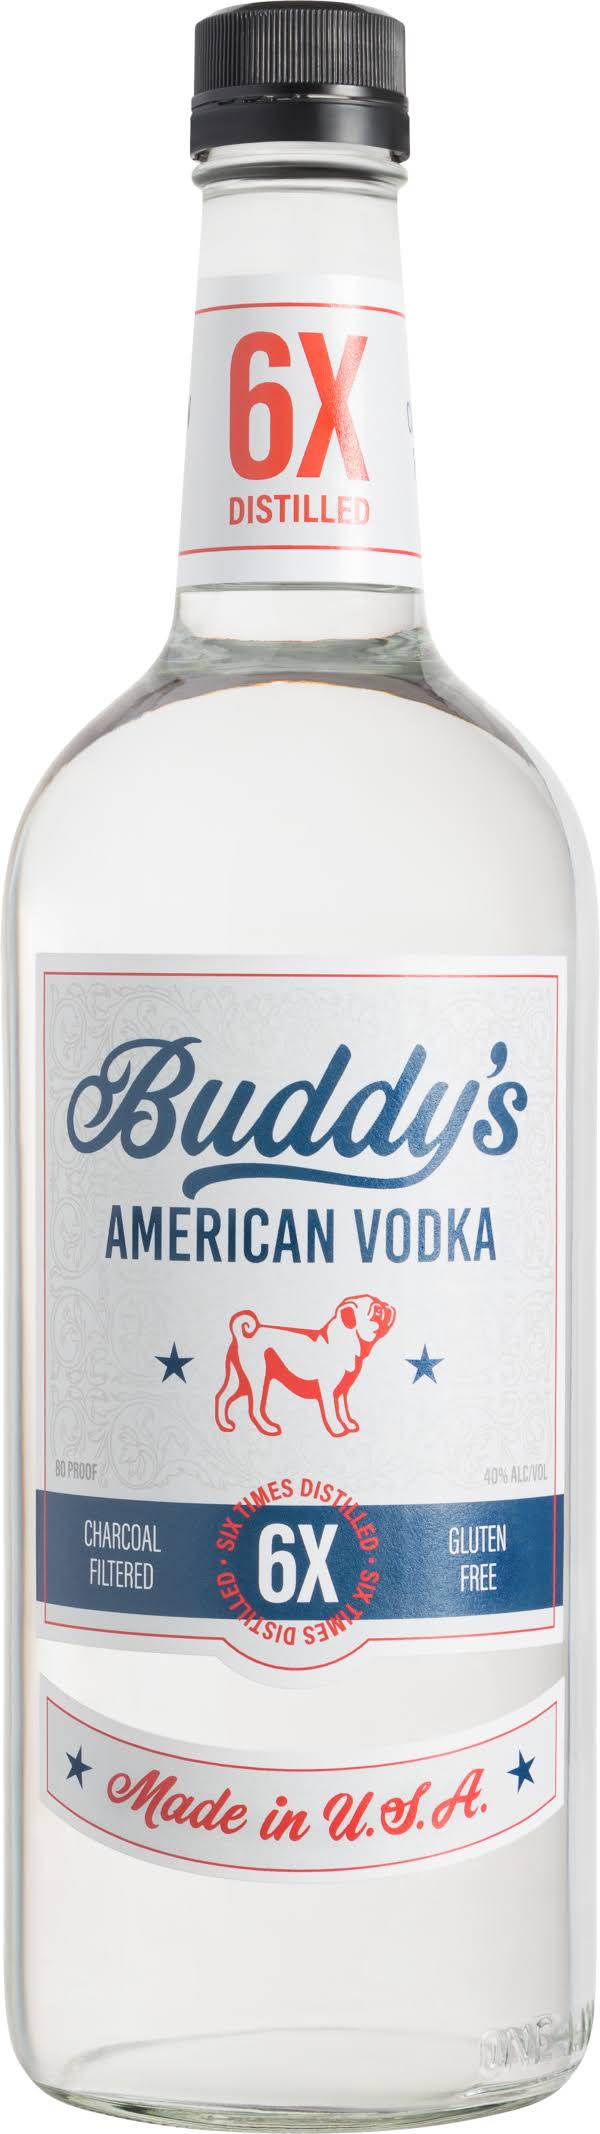 Buddy's American Vodka 1L